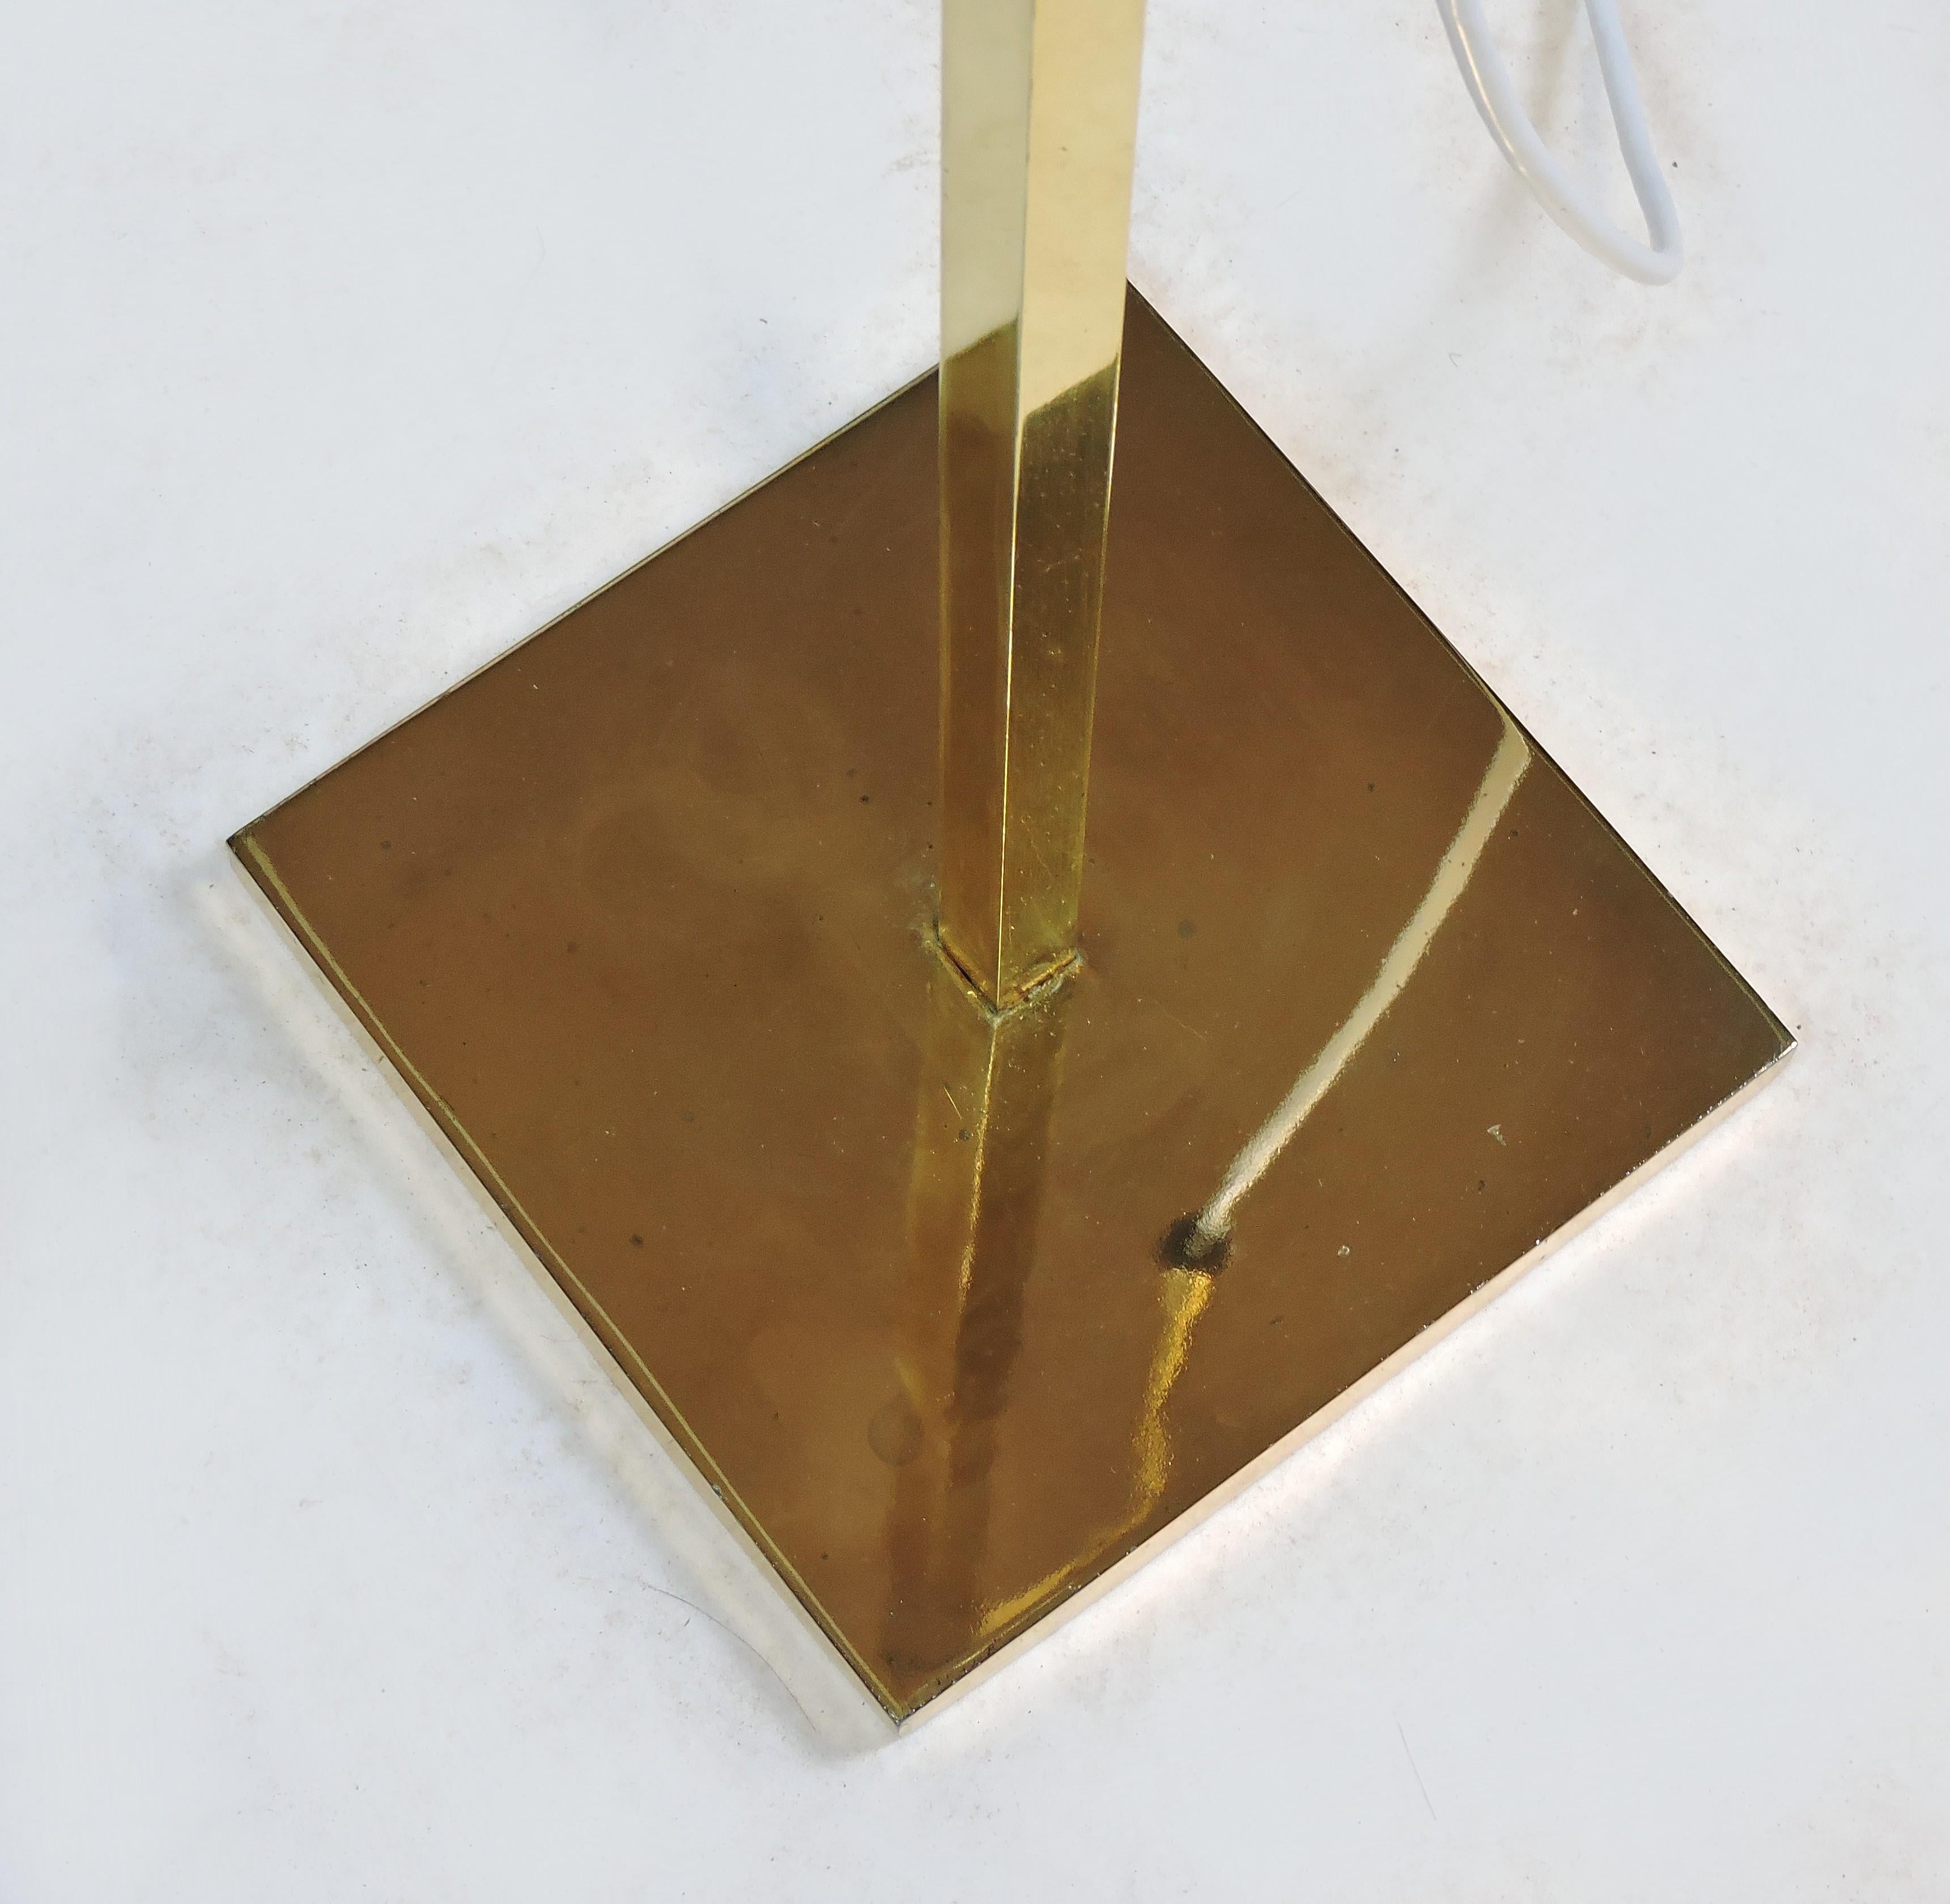 Mid-20th Century Mid-Century Modern Adjustable Minimalist Brass Floor Lamp by Laurel